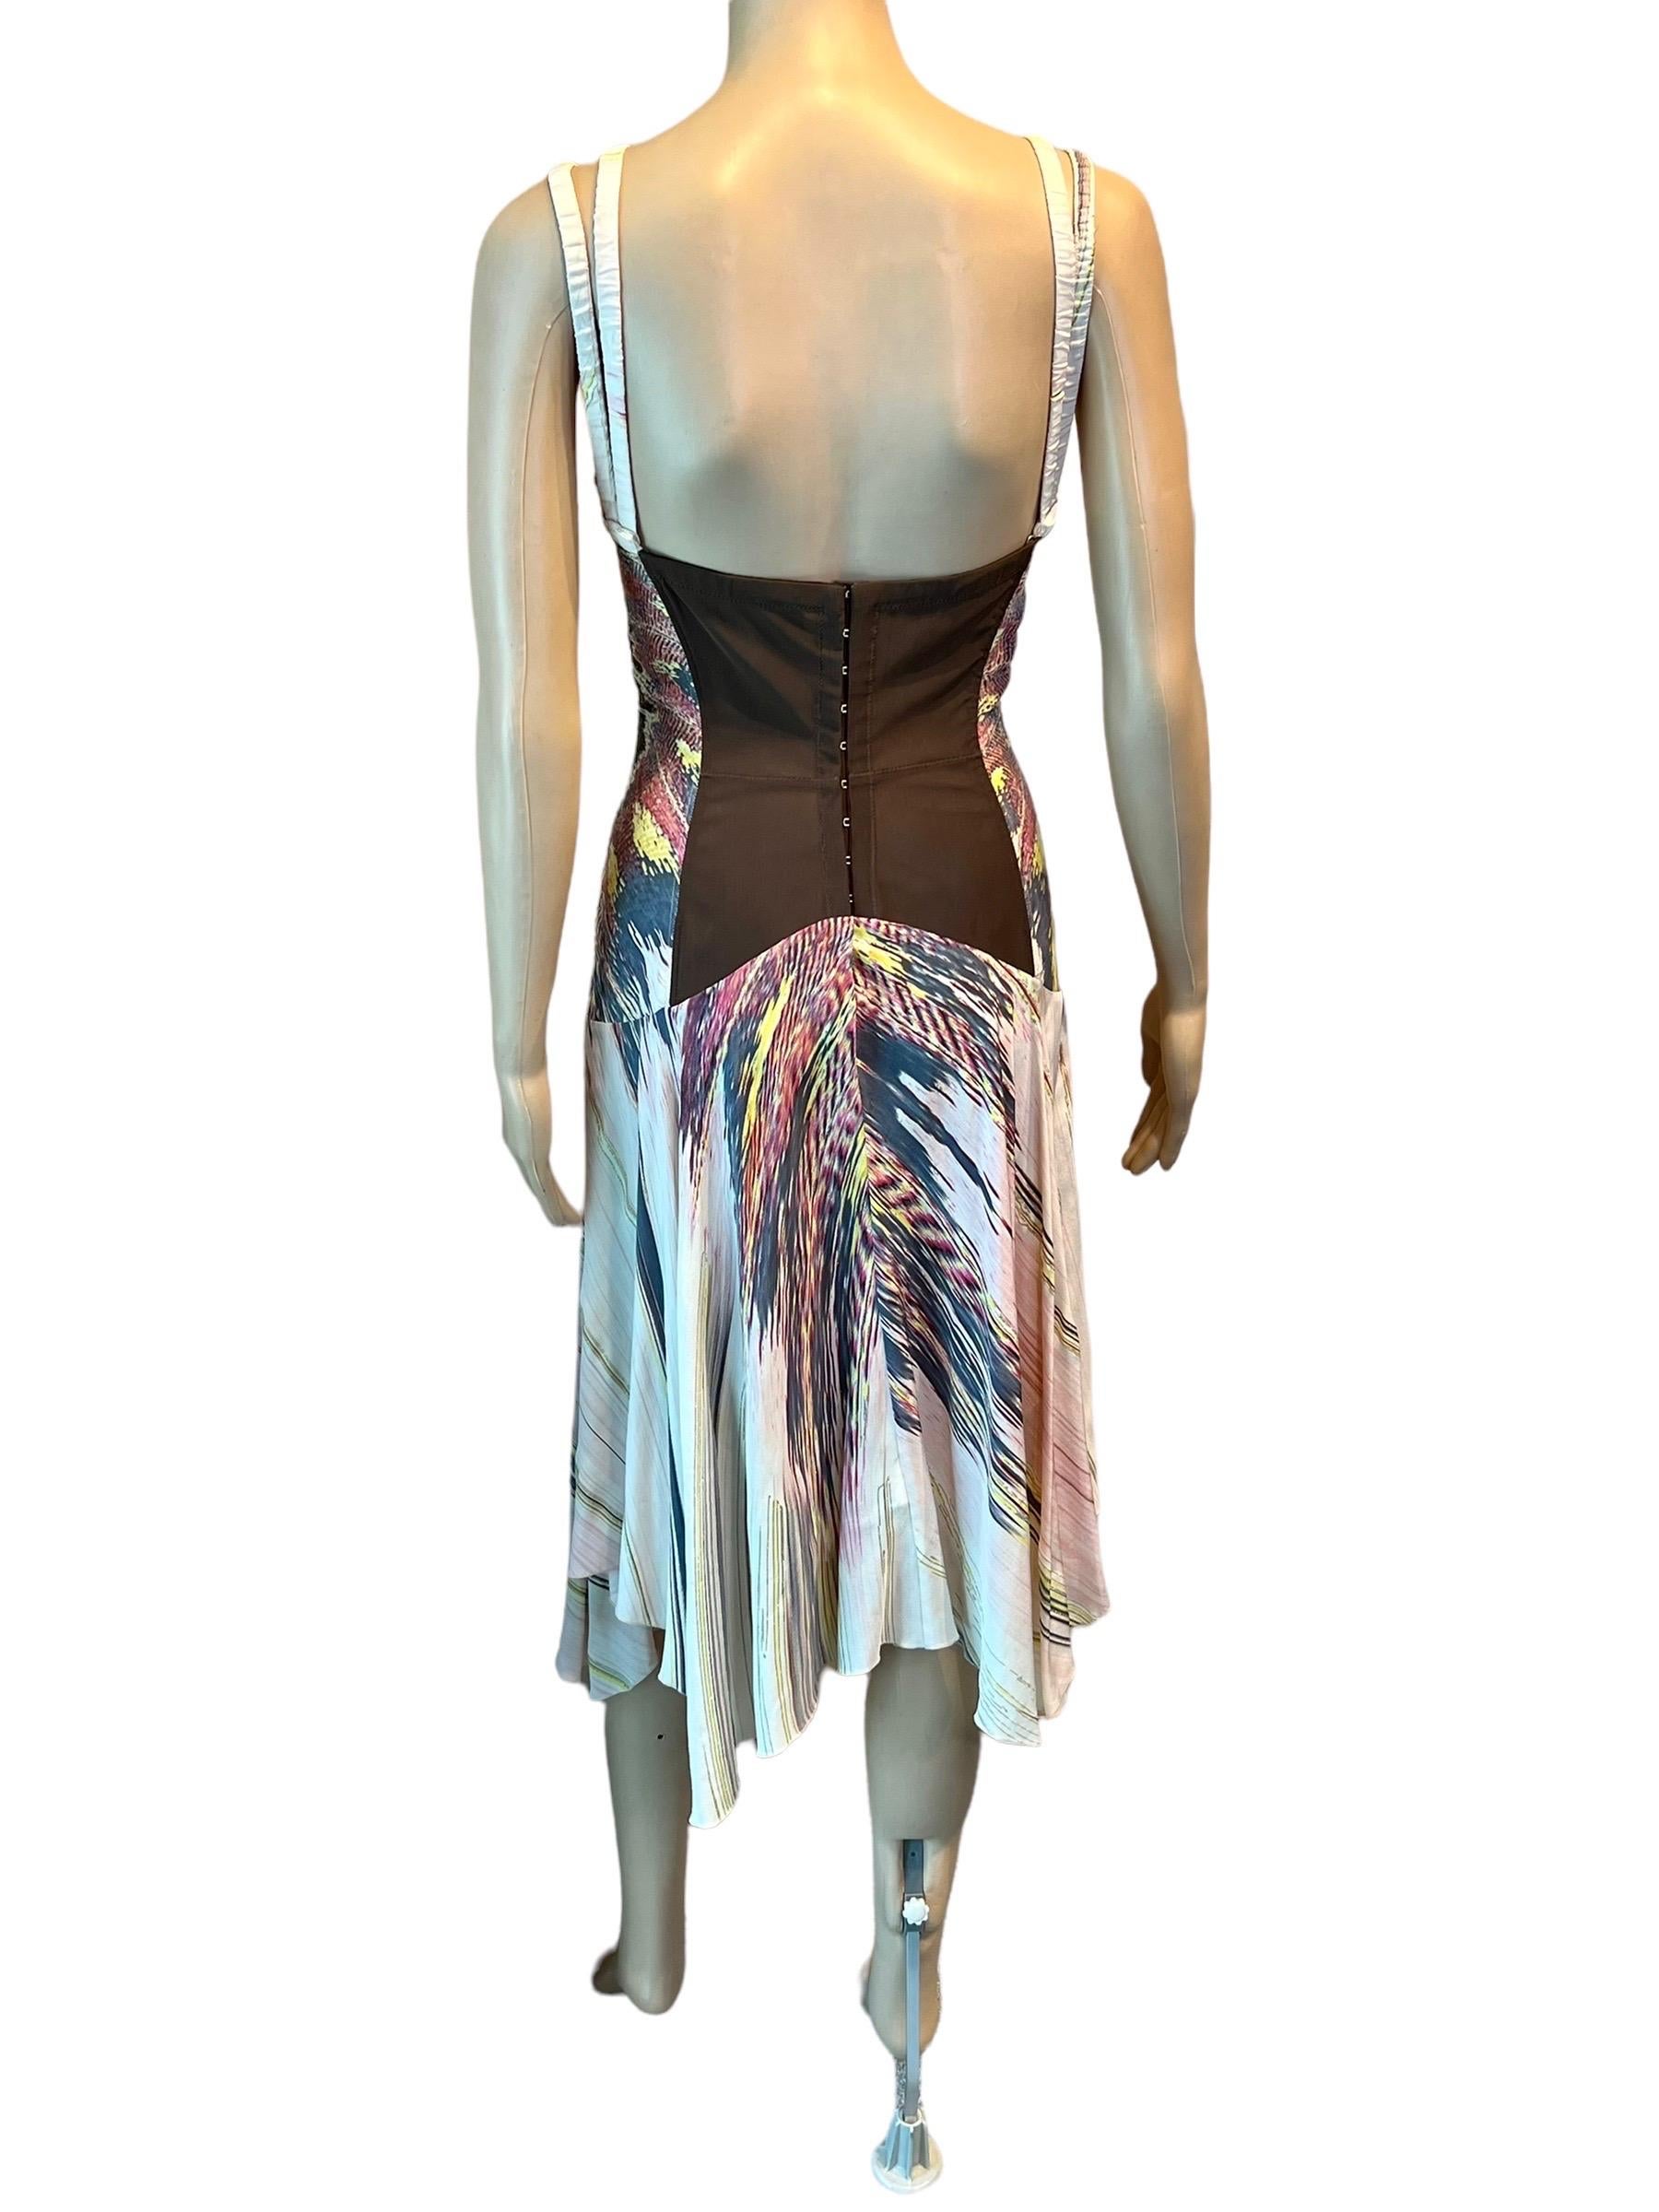 Roberto Cavalli S/S 2004 Bustier Corset Plunging Neckline Feather Print Dress For Sale 4